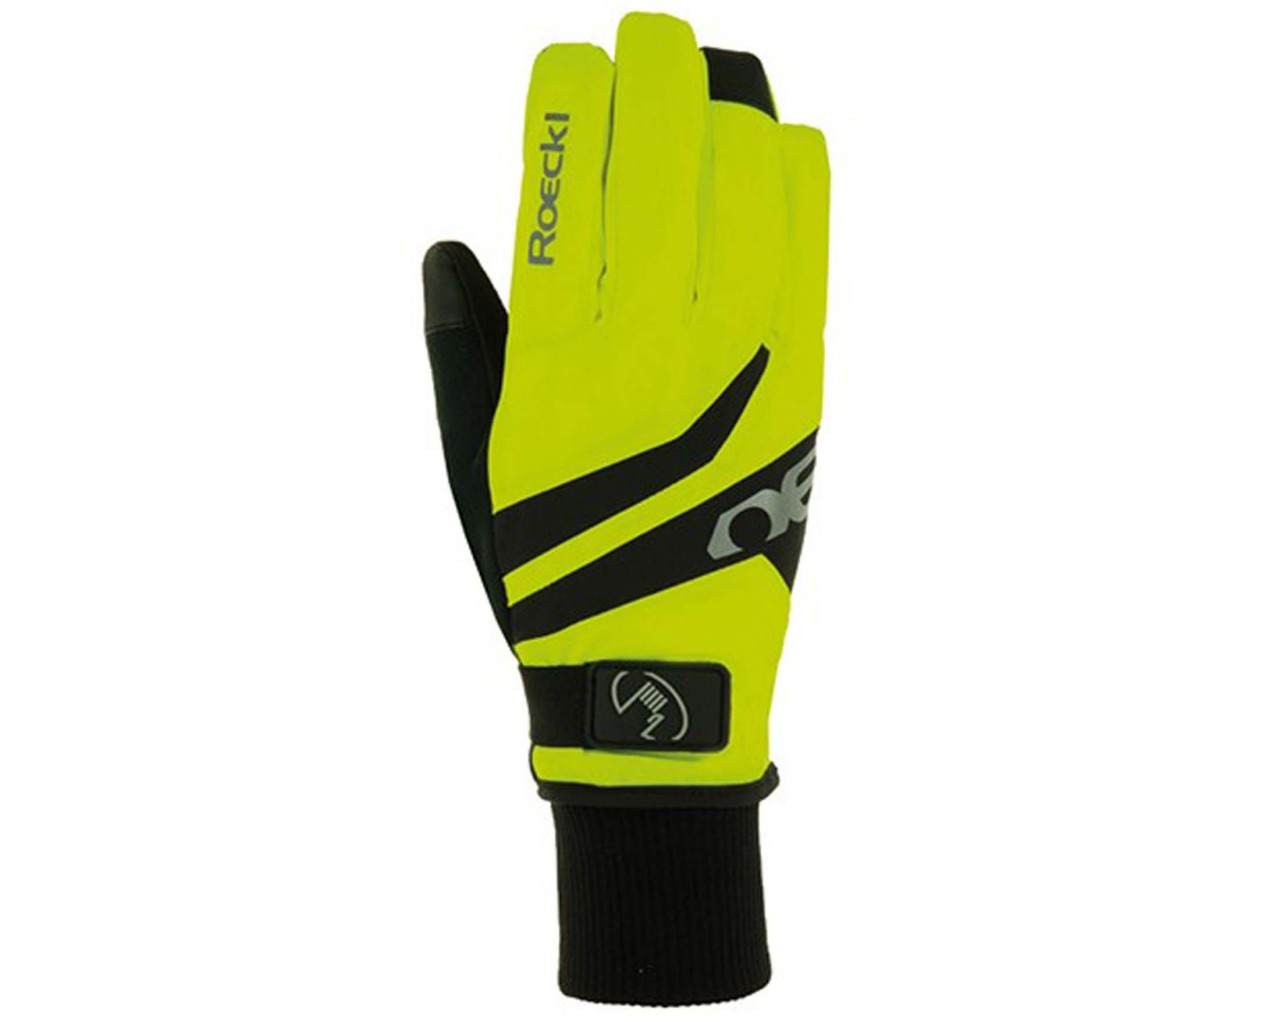 Roeckl Rocca GTX Winter Bike Gloves long fingers | neon yellow